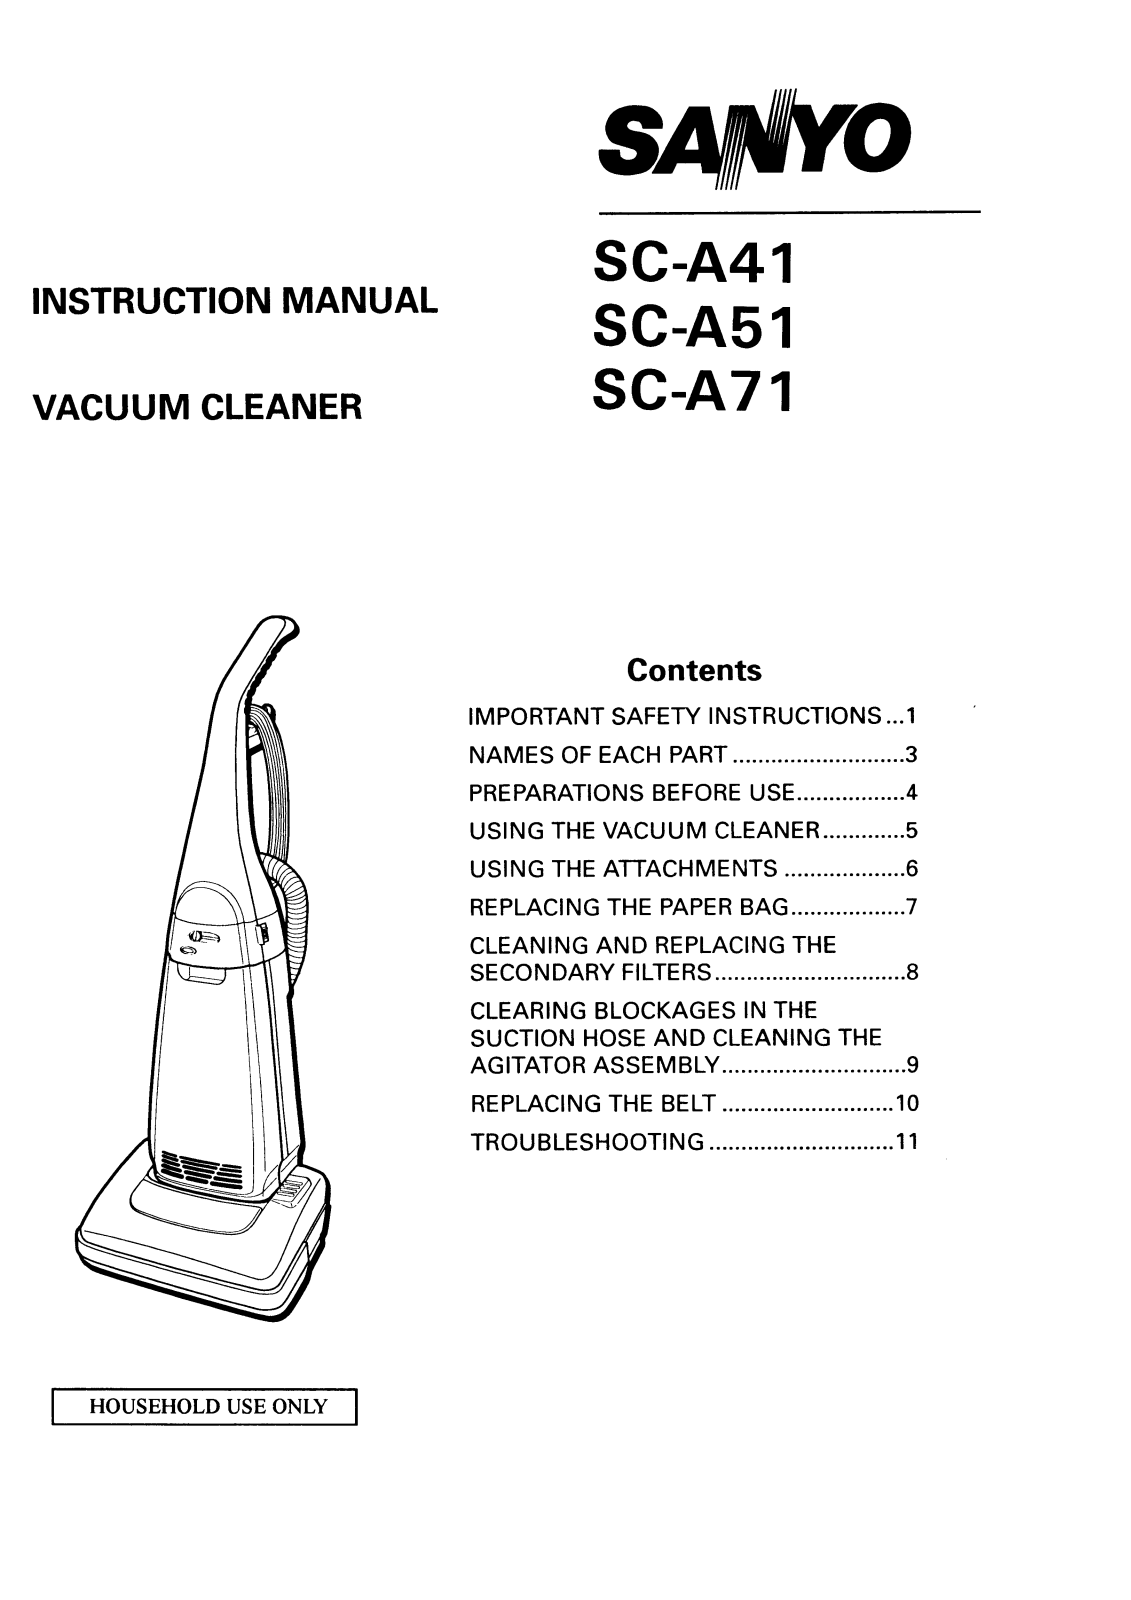 Sanyo SC-A41, SC-A51, SC-A71 Instruction Manual